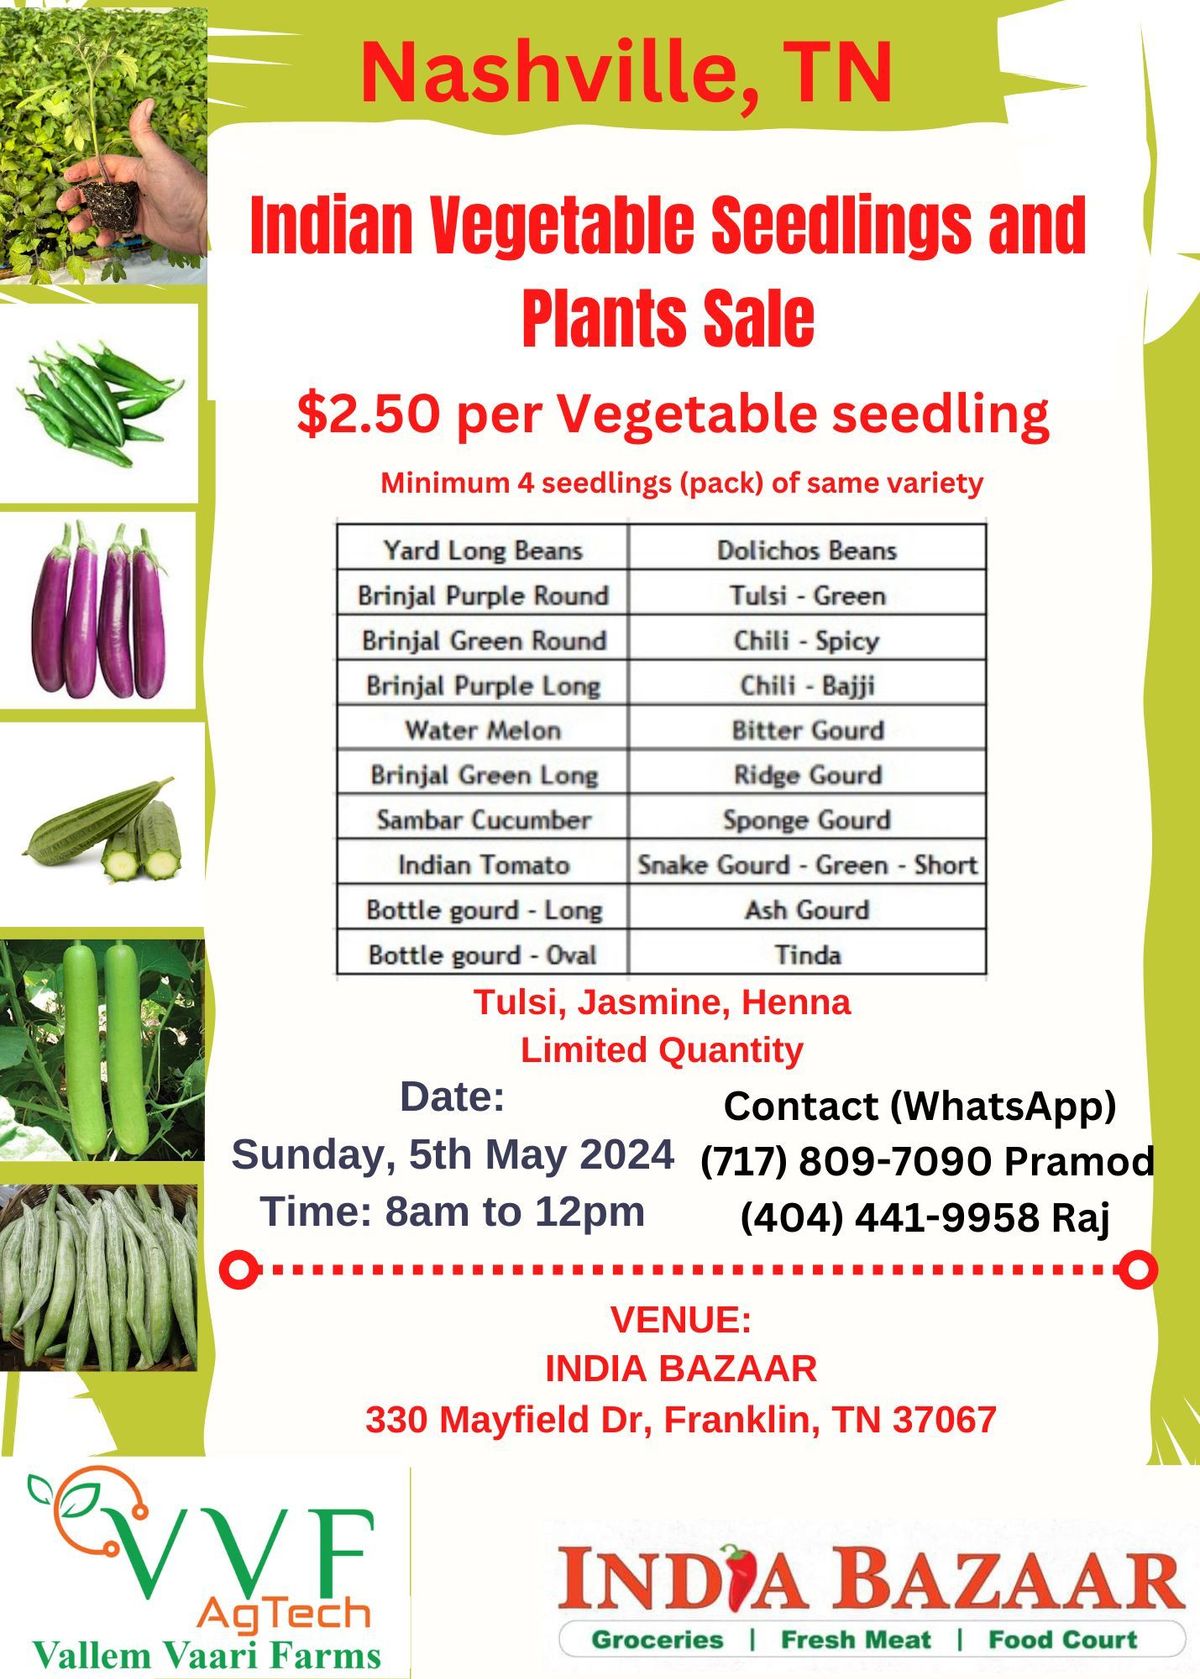 Indian Vegetable Seedlings and Plants Sale